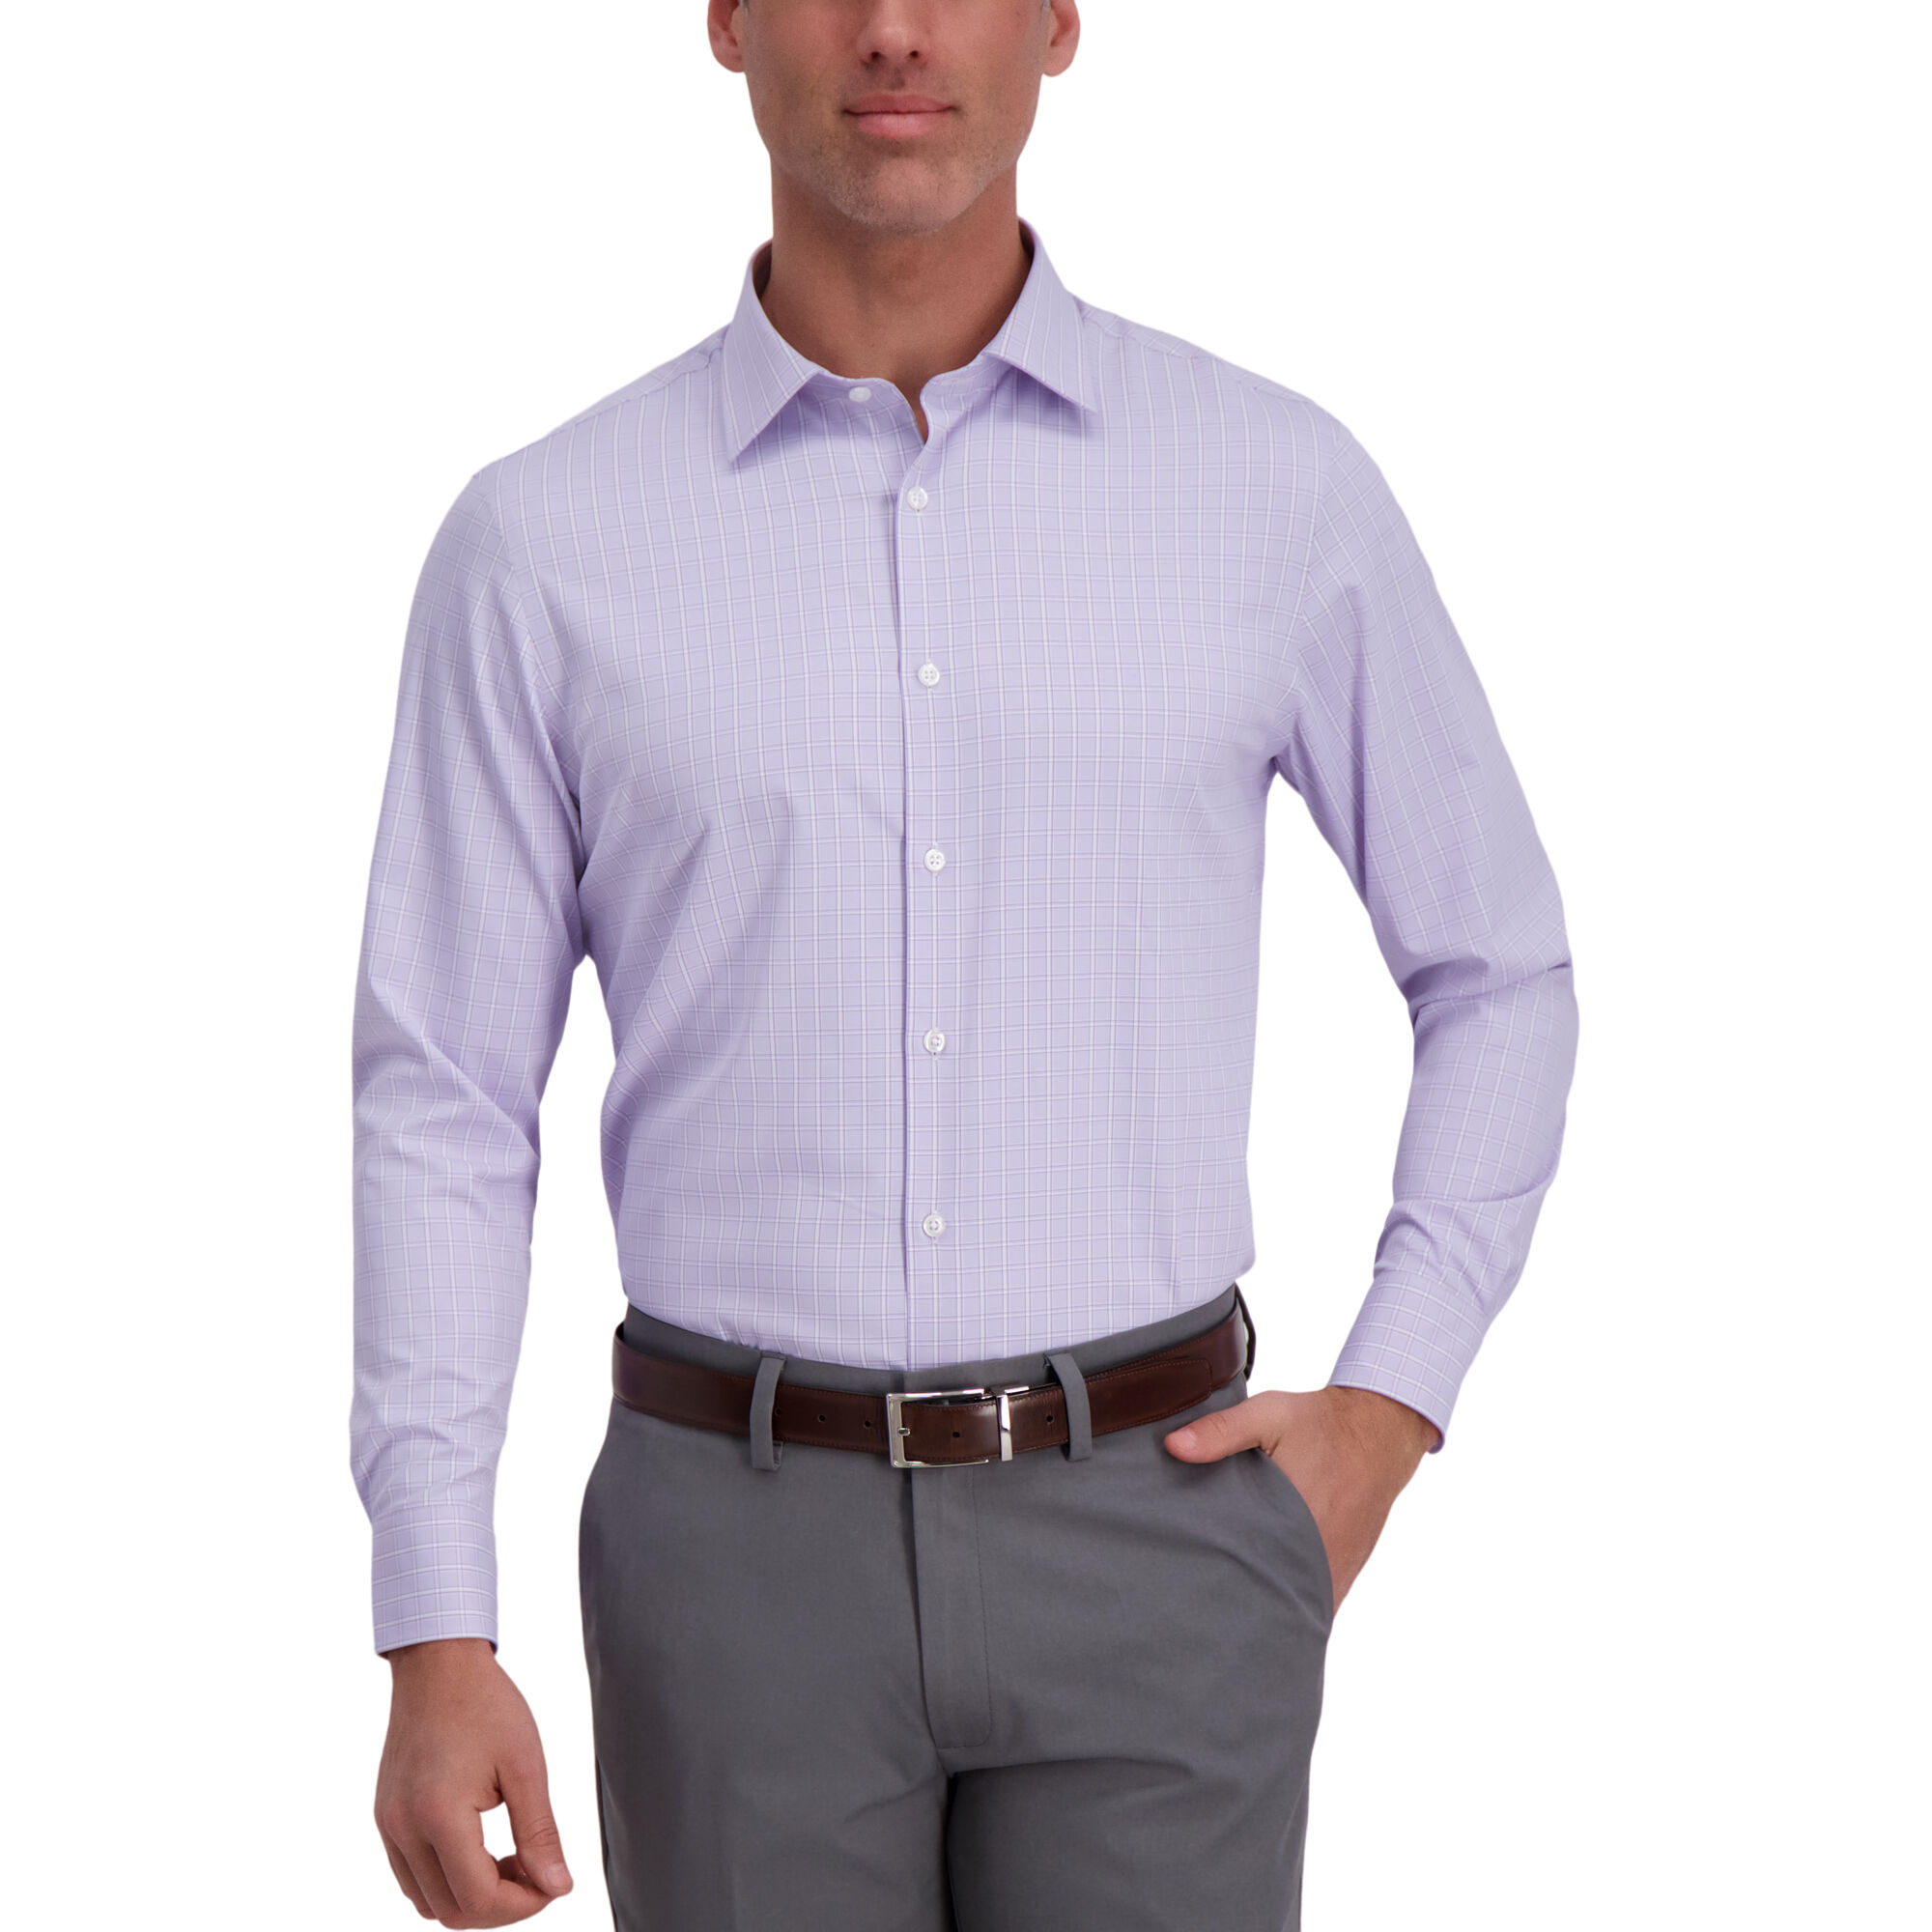 J.M. Haggar Tech Performance Dress Shirt - Windowpane Purple (HAT002HT284 Clothing Shirts & Tops) photo